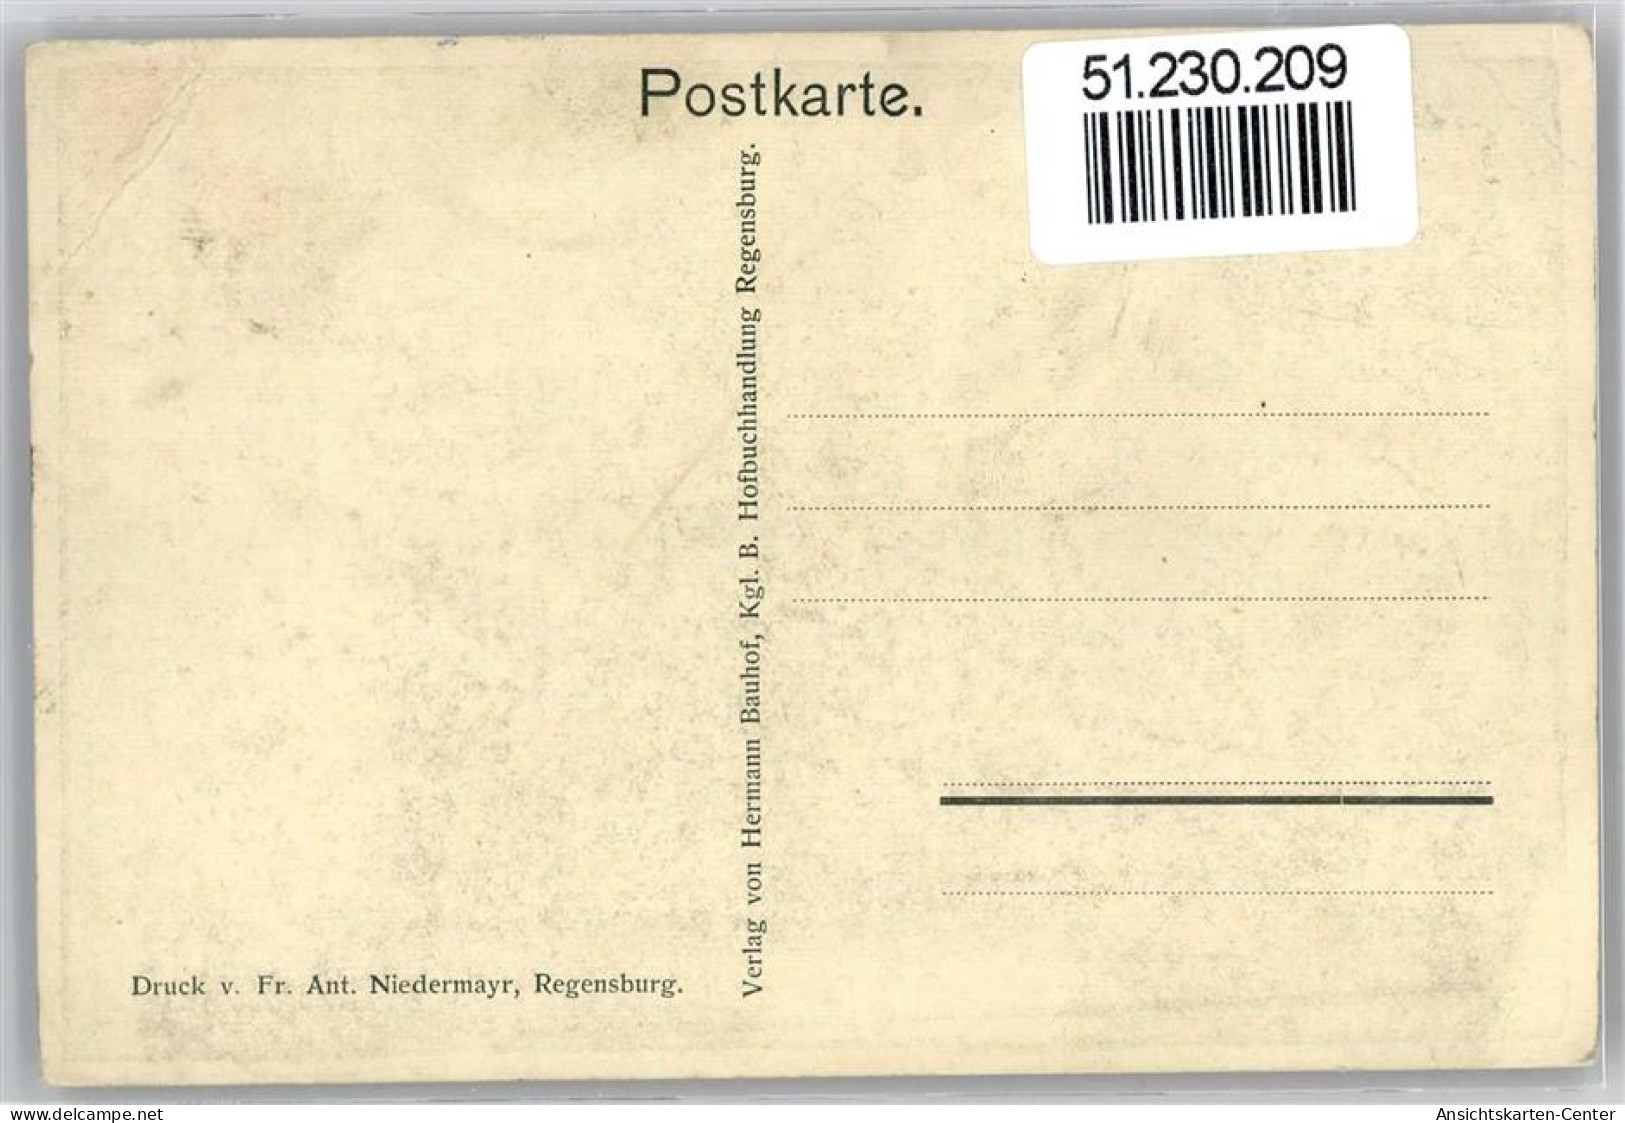 51230209 - Regensburg - Regensburg